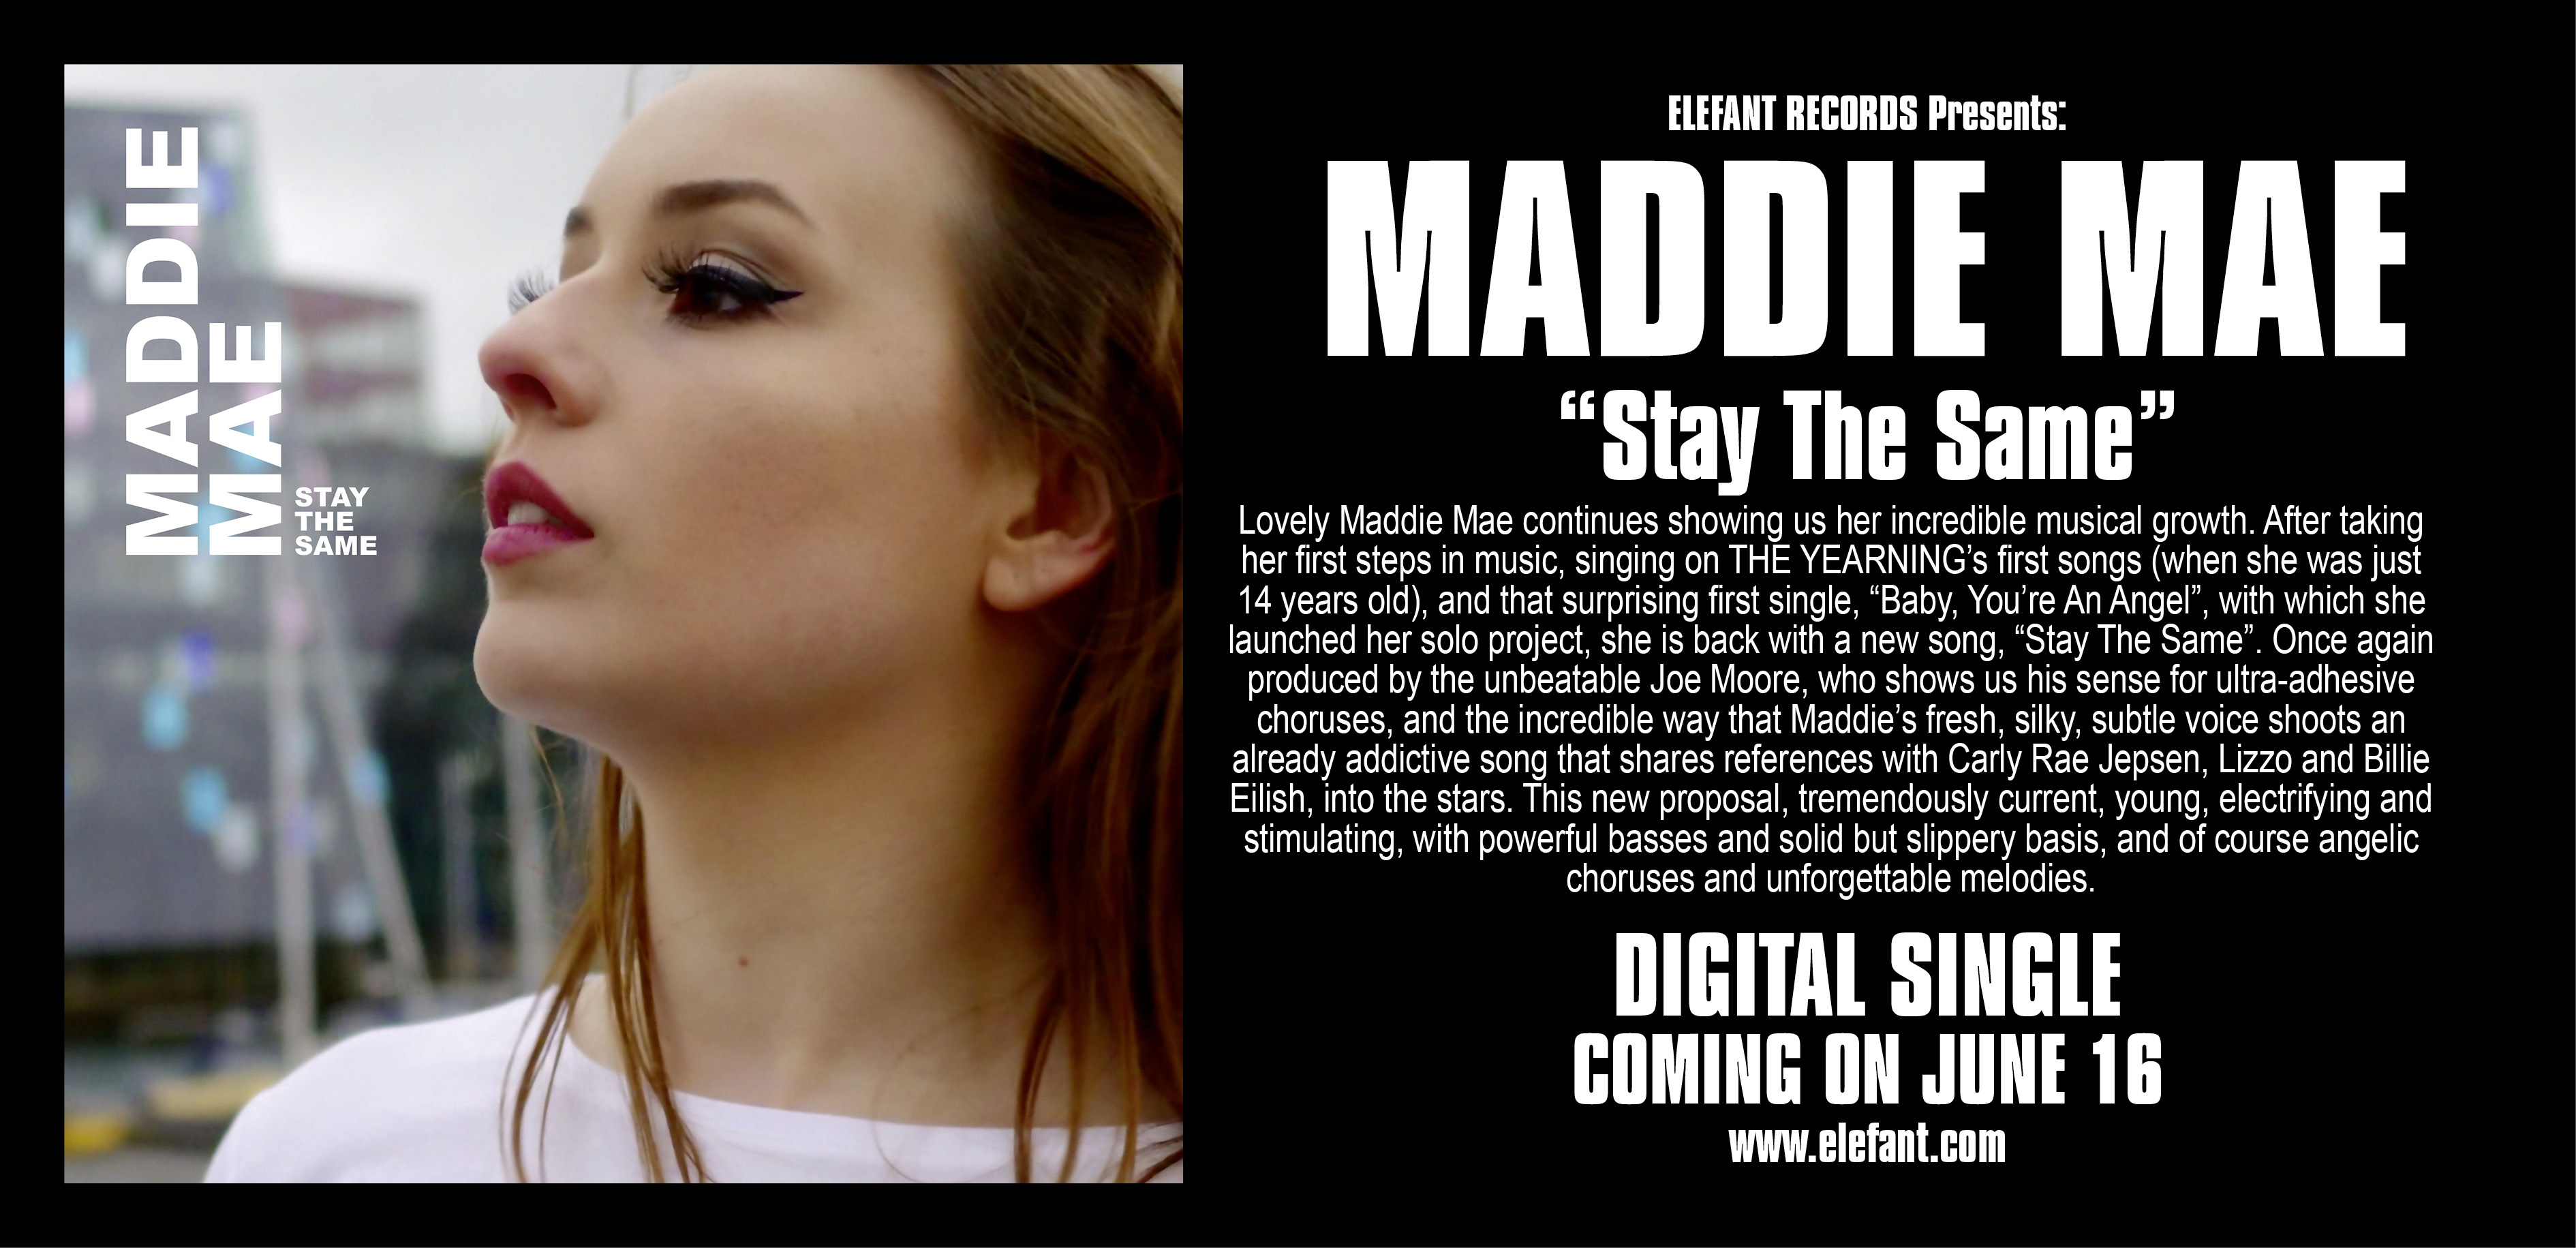 Maddie Mae "Stay The Same" Digital Single